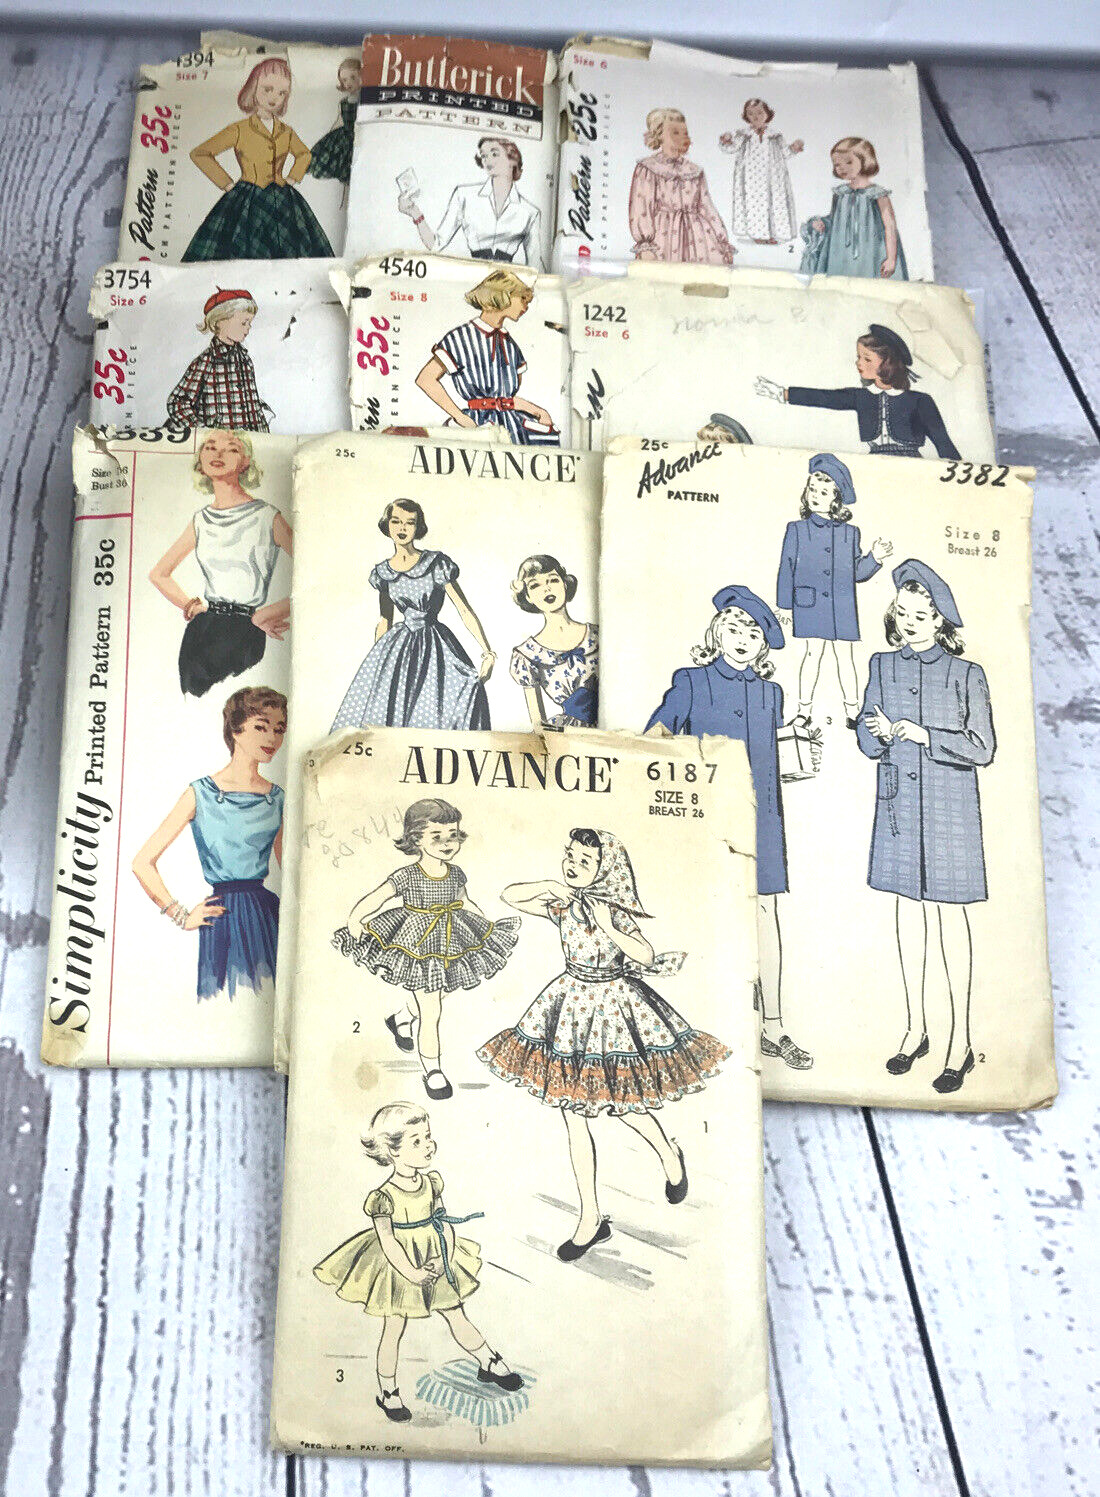 Vintage Sewing Pattern 1930s 1940s Lot Advance Simplicity Womens Girls Fashion